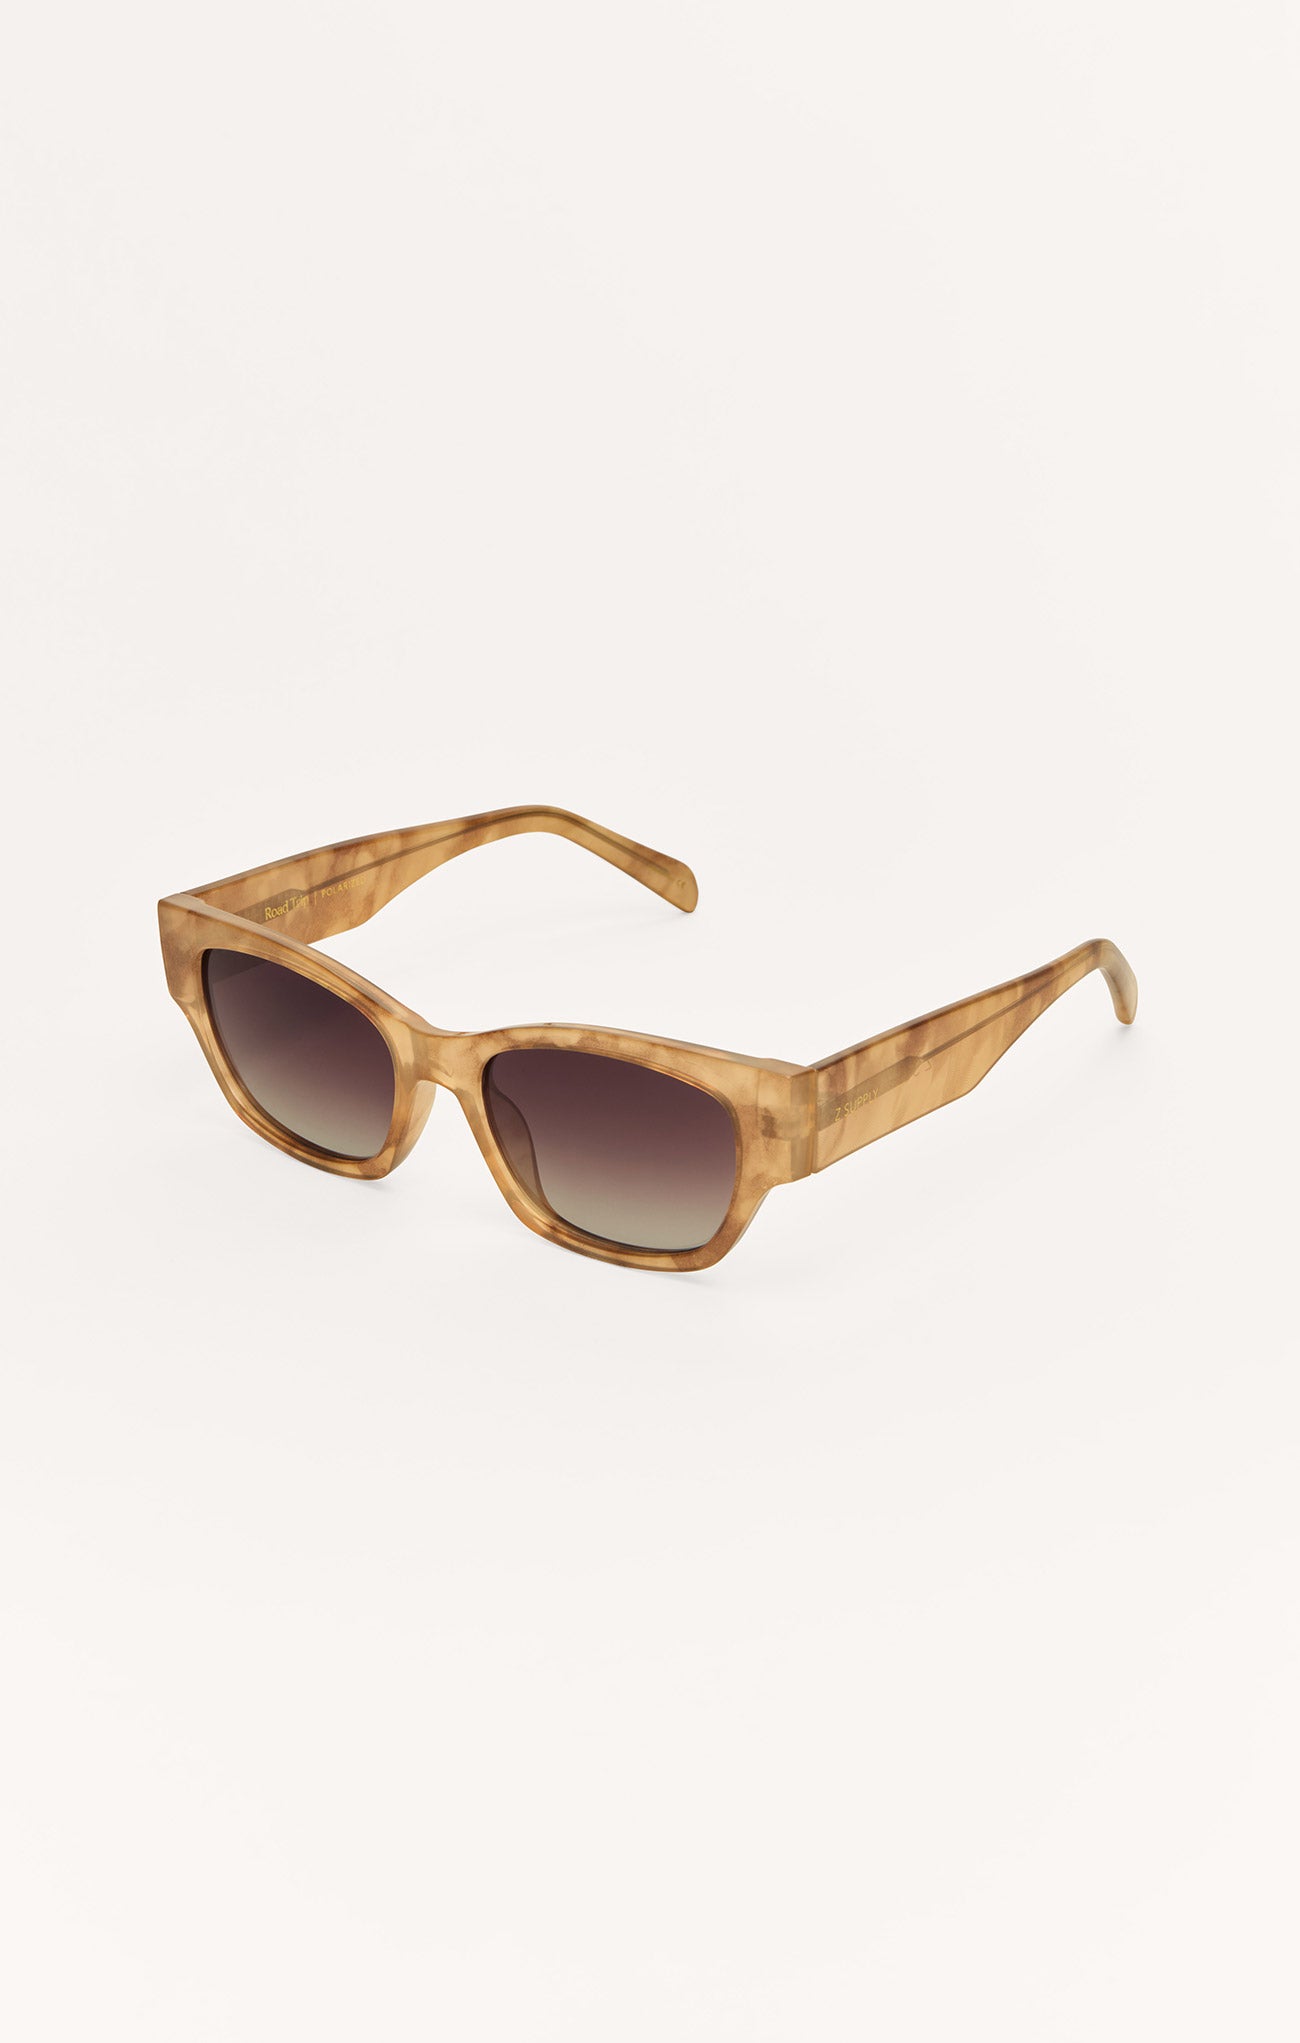 Z Supply - Roadtrip Sunglasses | Warm Sands - Gradient